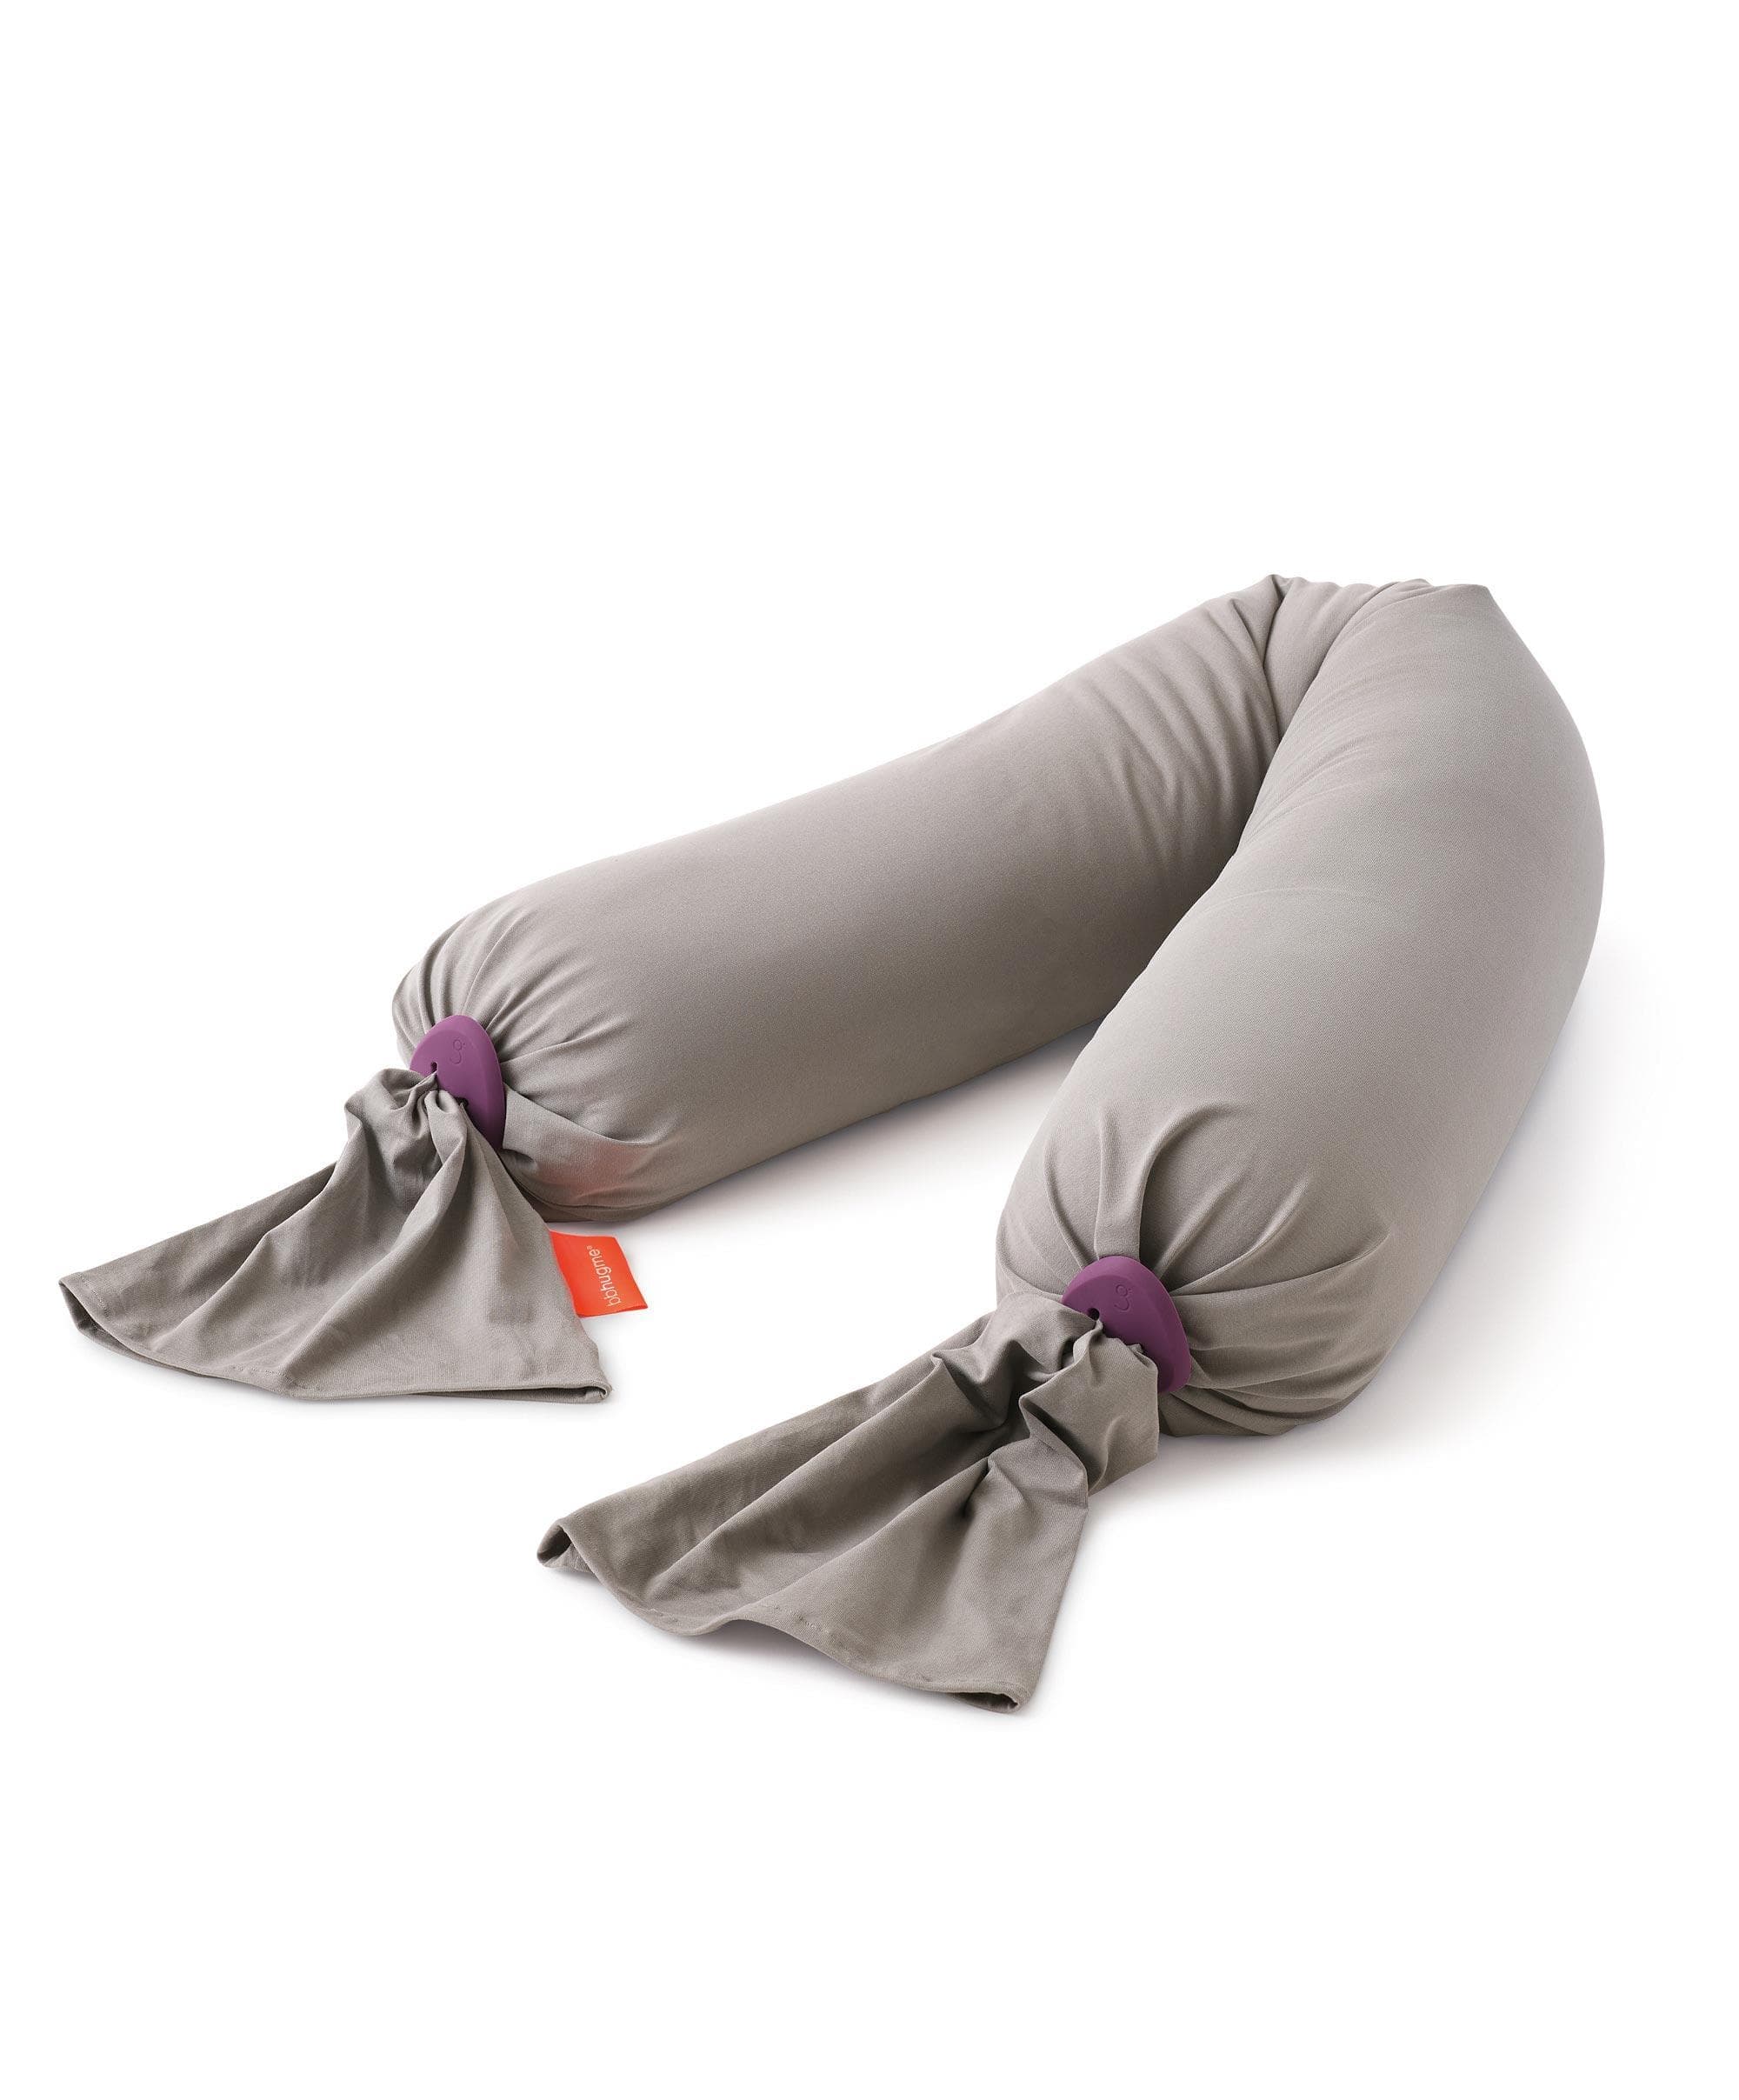 bbhugme™ Pregnancy Pillow Kit - Stone